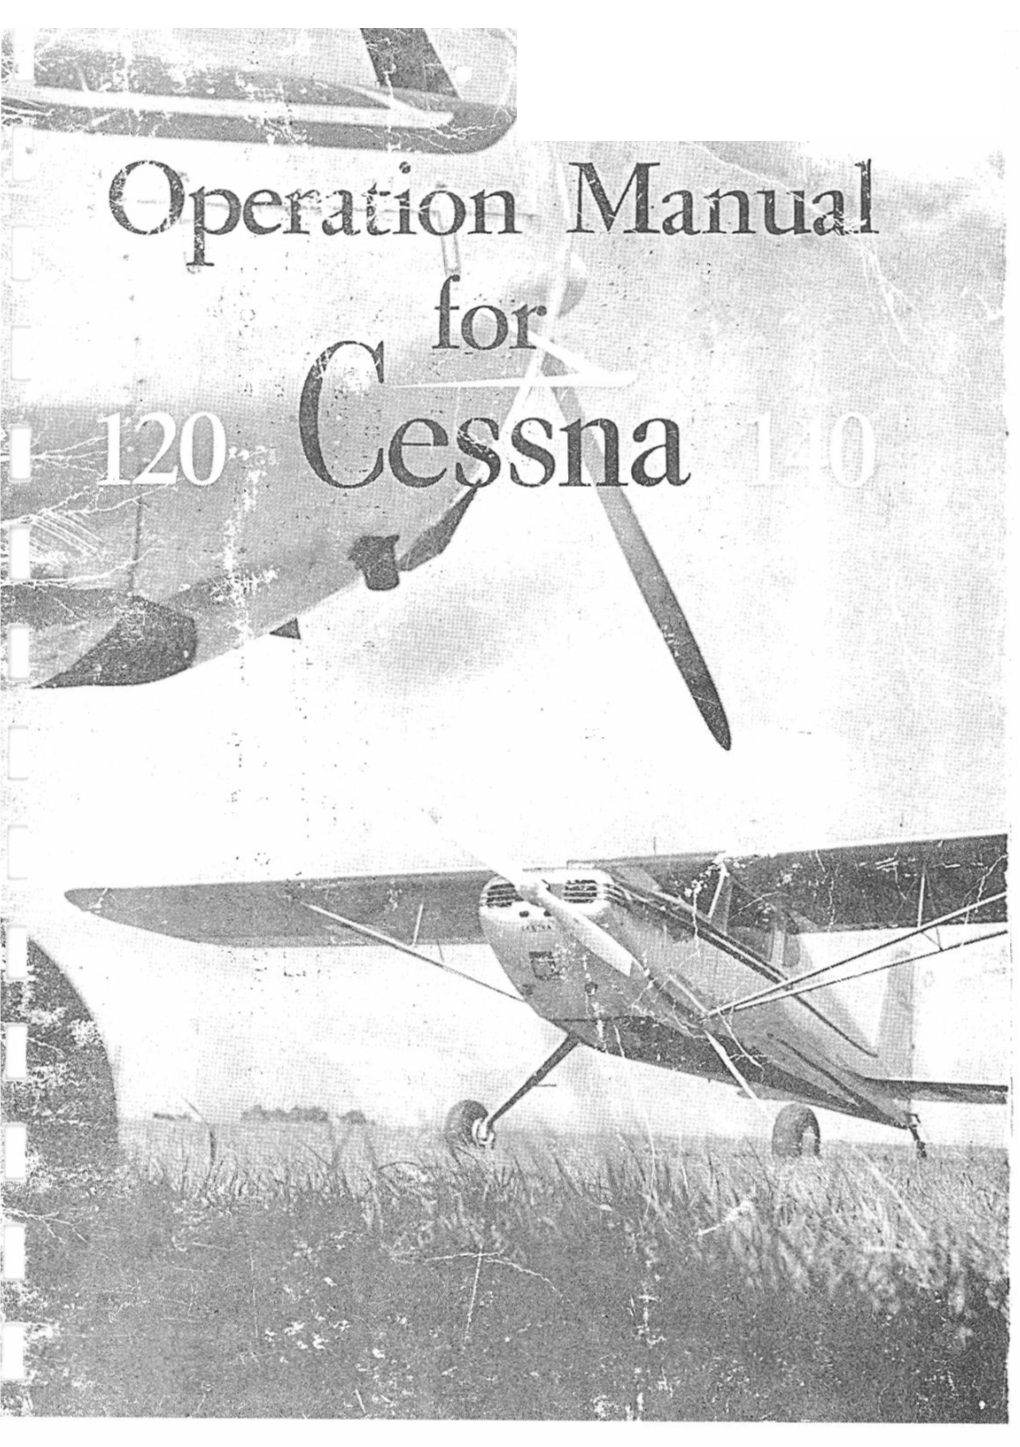 Cessna 120 Operation Manual